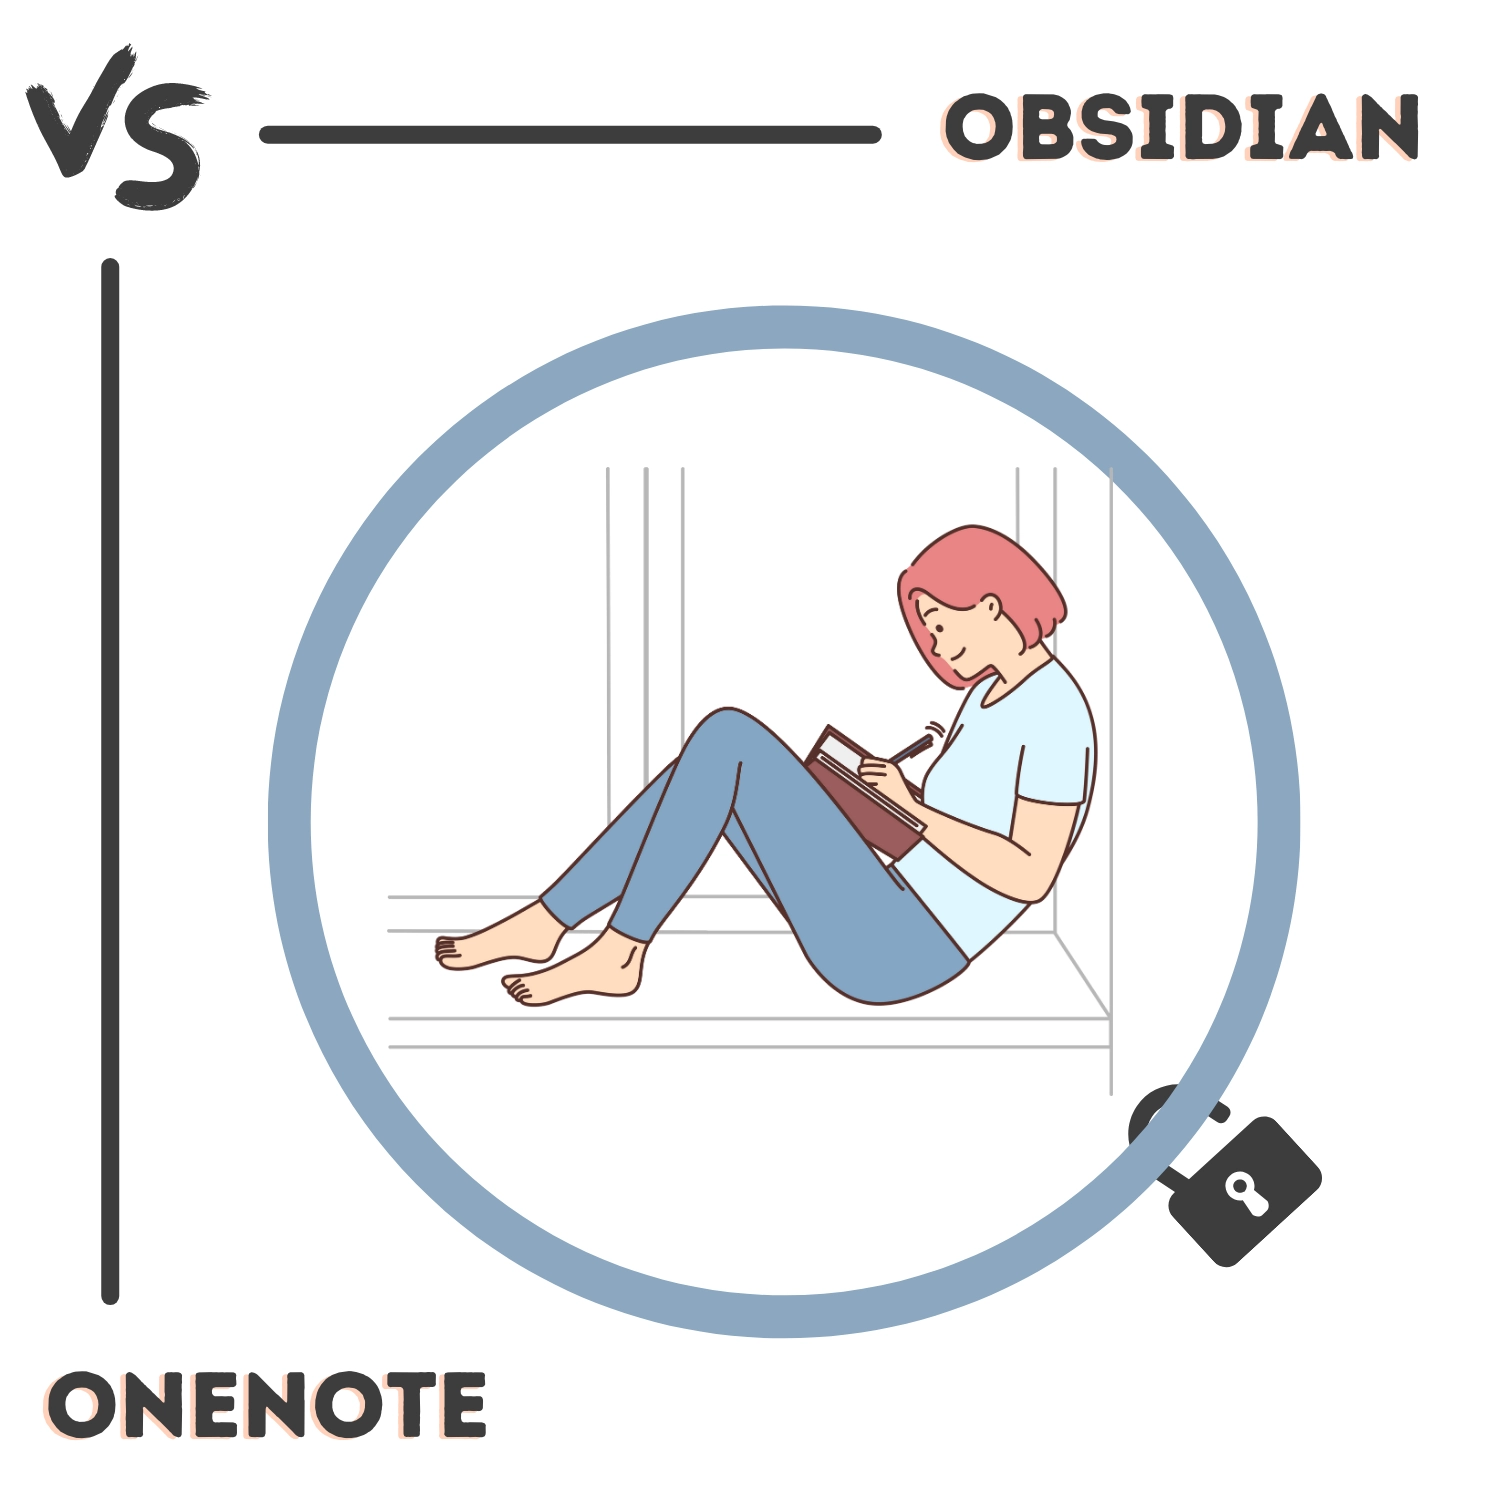 Obsidian vs OneNote